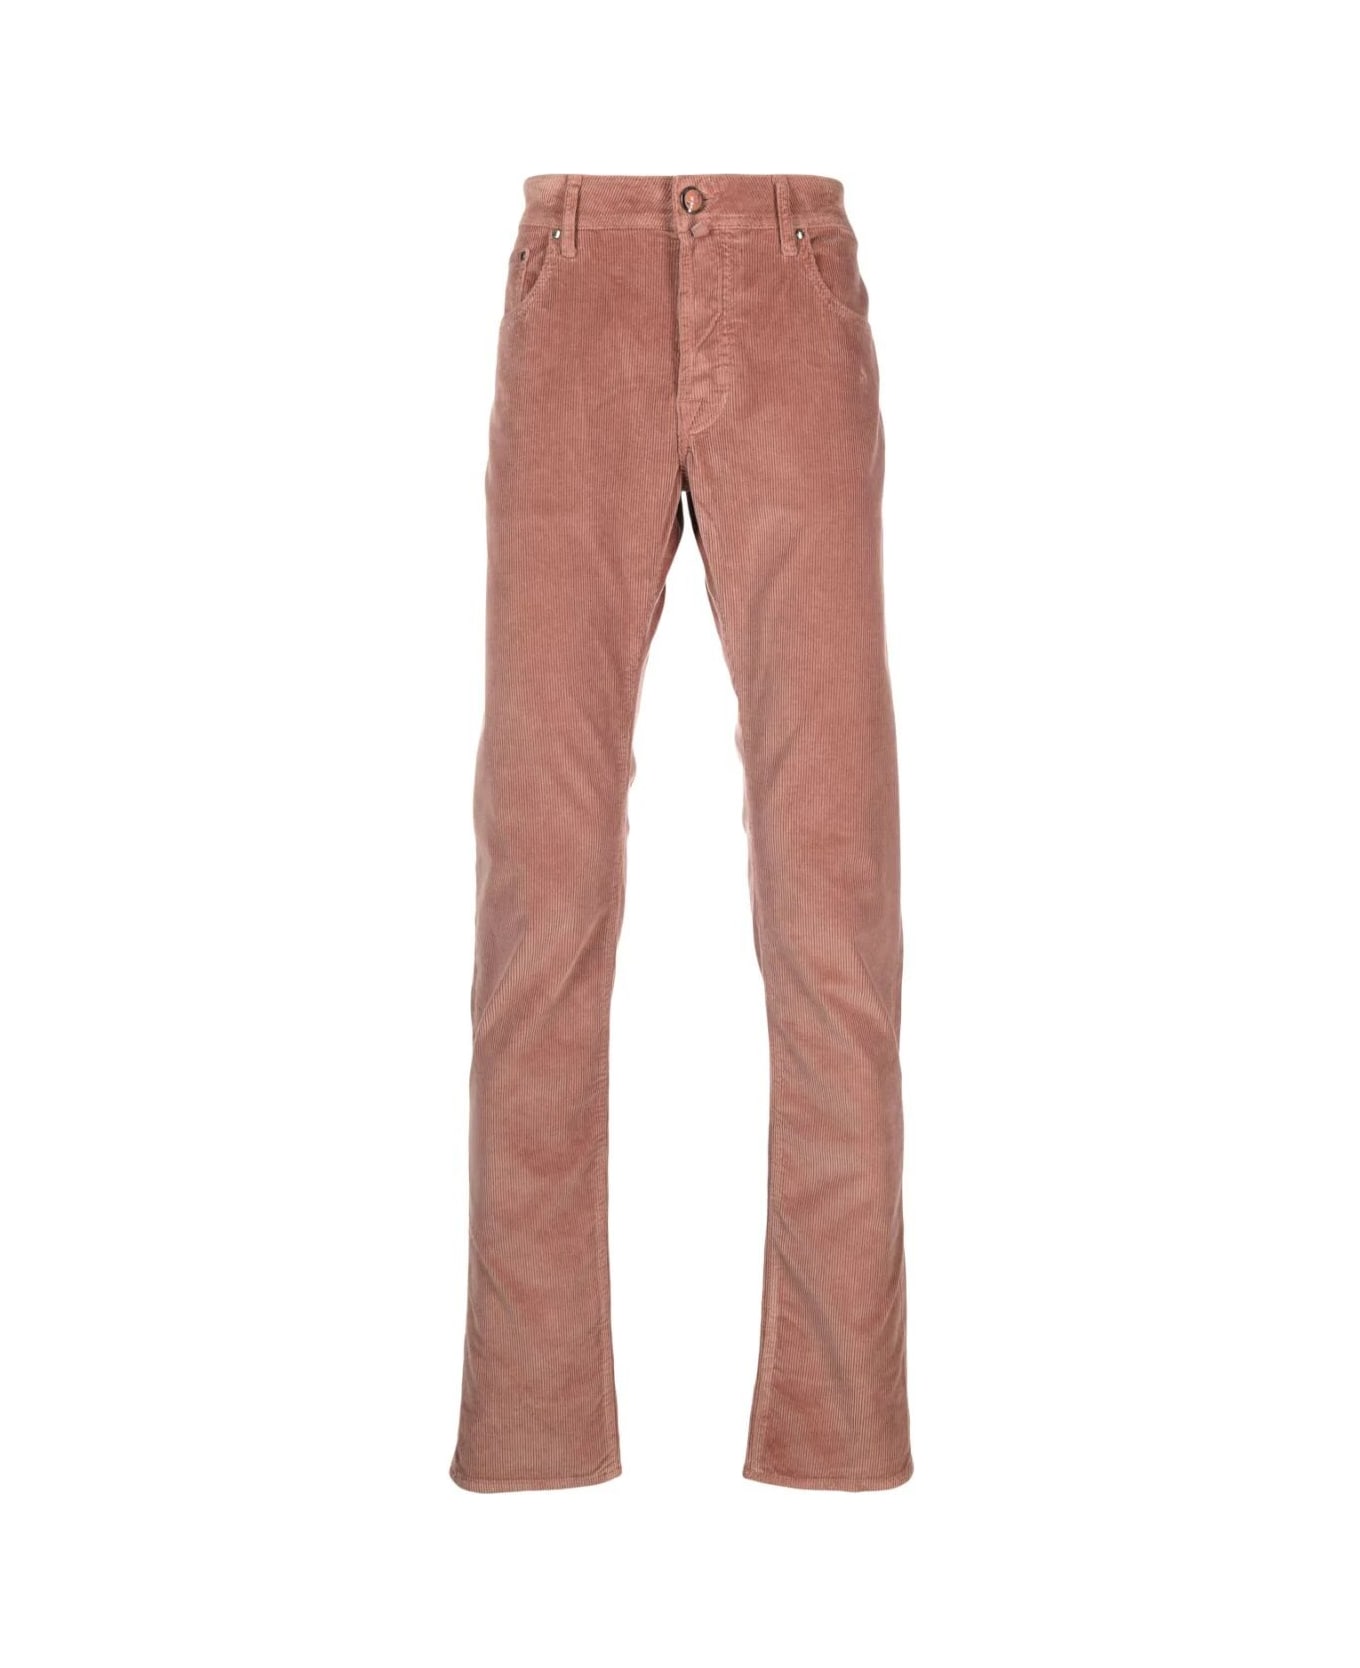 Jacob Cohen Bard Slim Fit Jeans - Dusty Pink